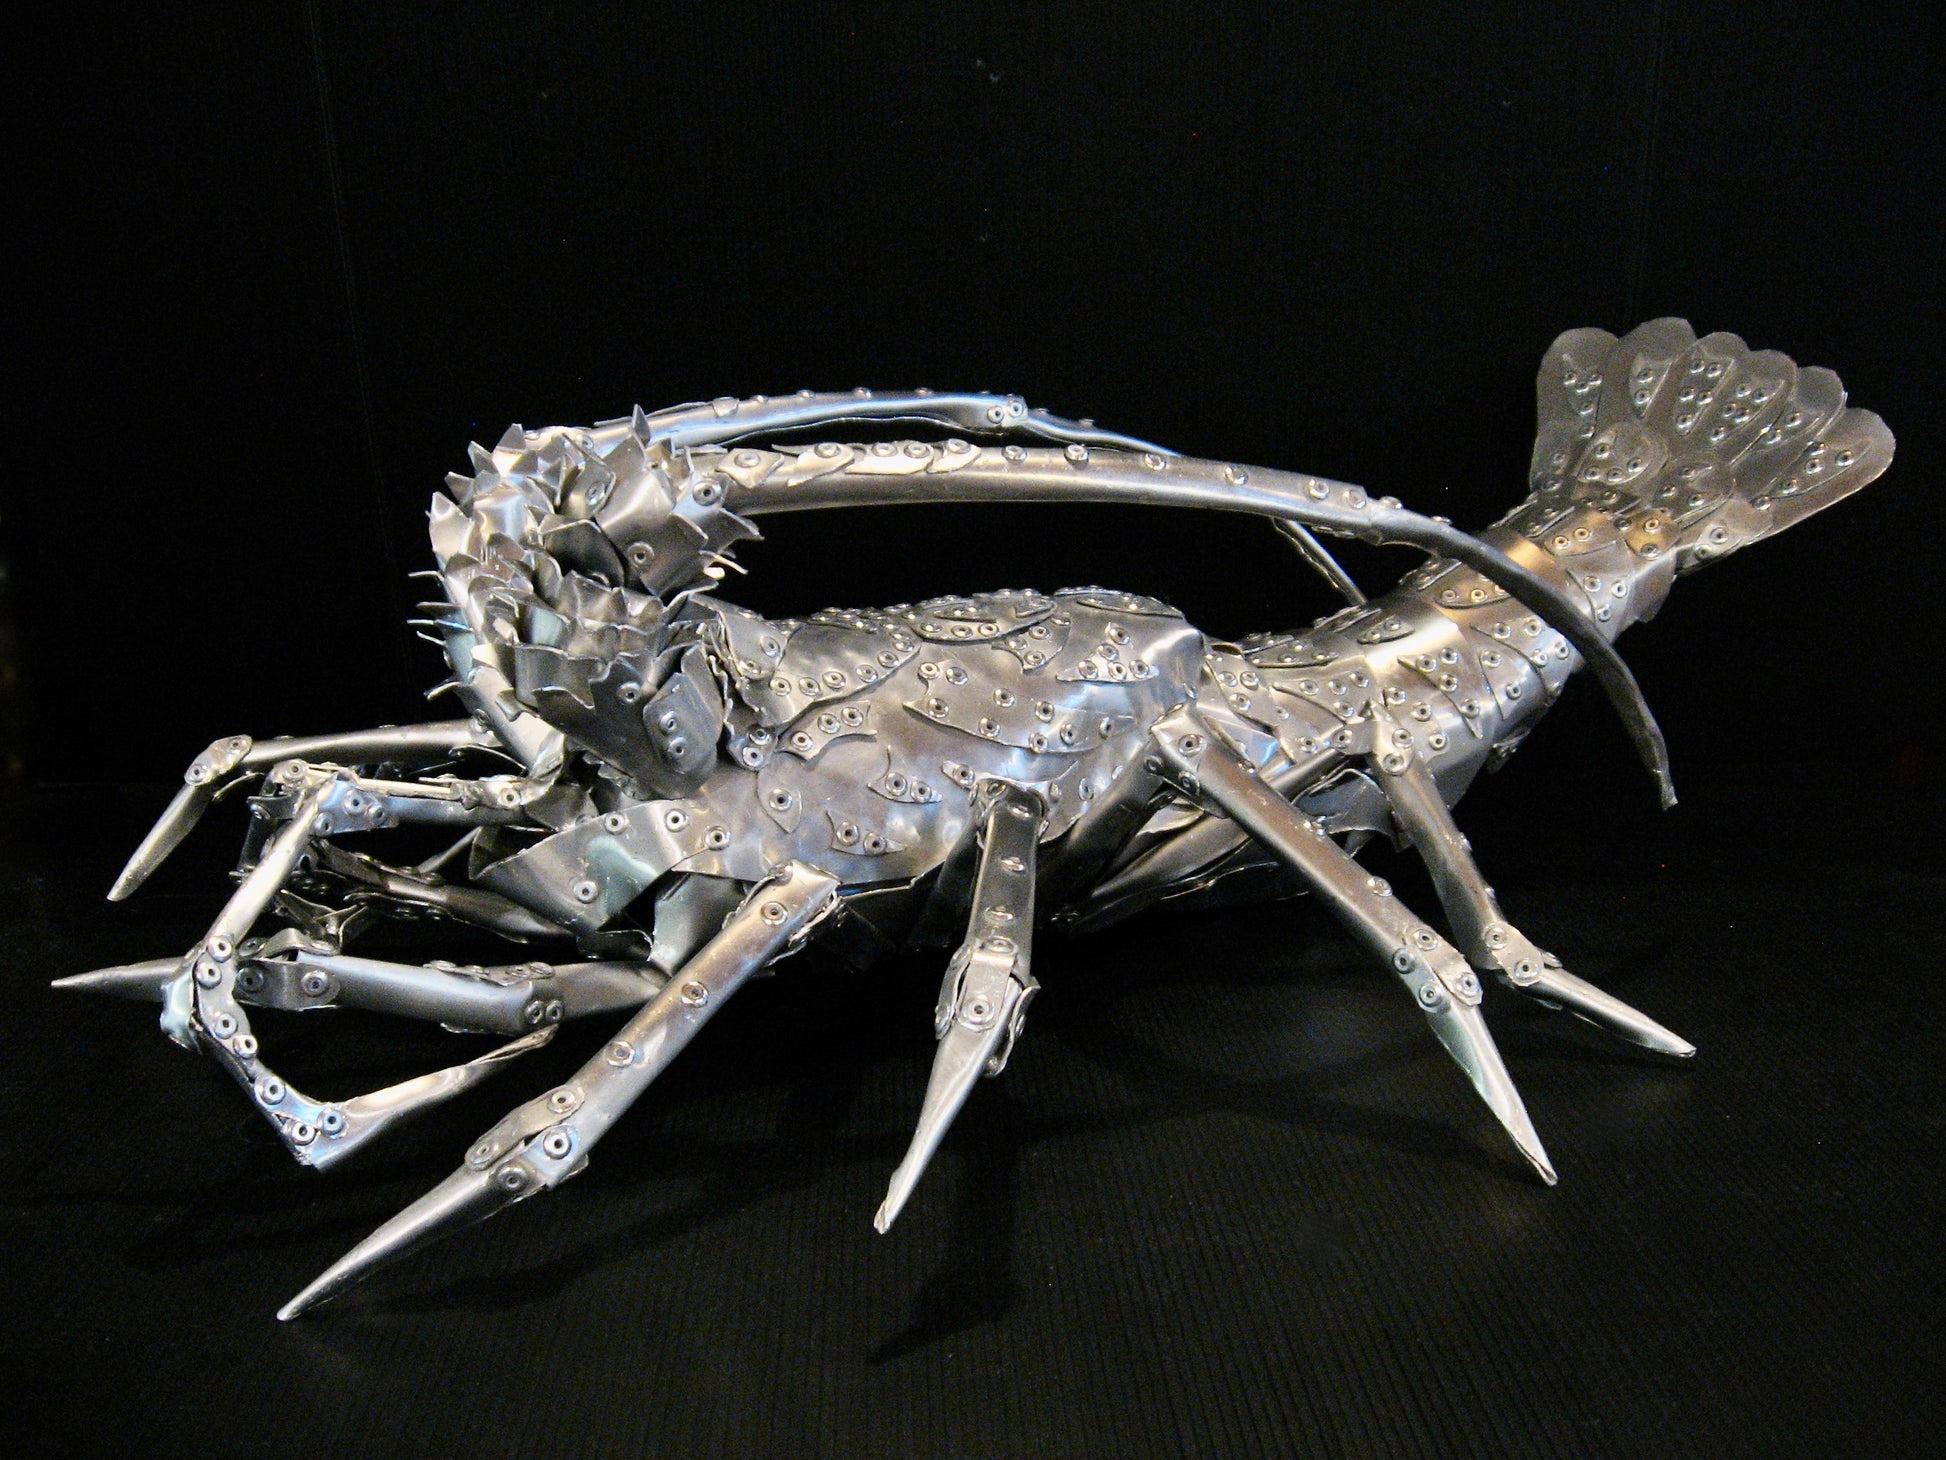 Aluminium Koura (crayfish) Sculpure by Harley Moore 60cm